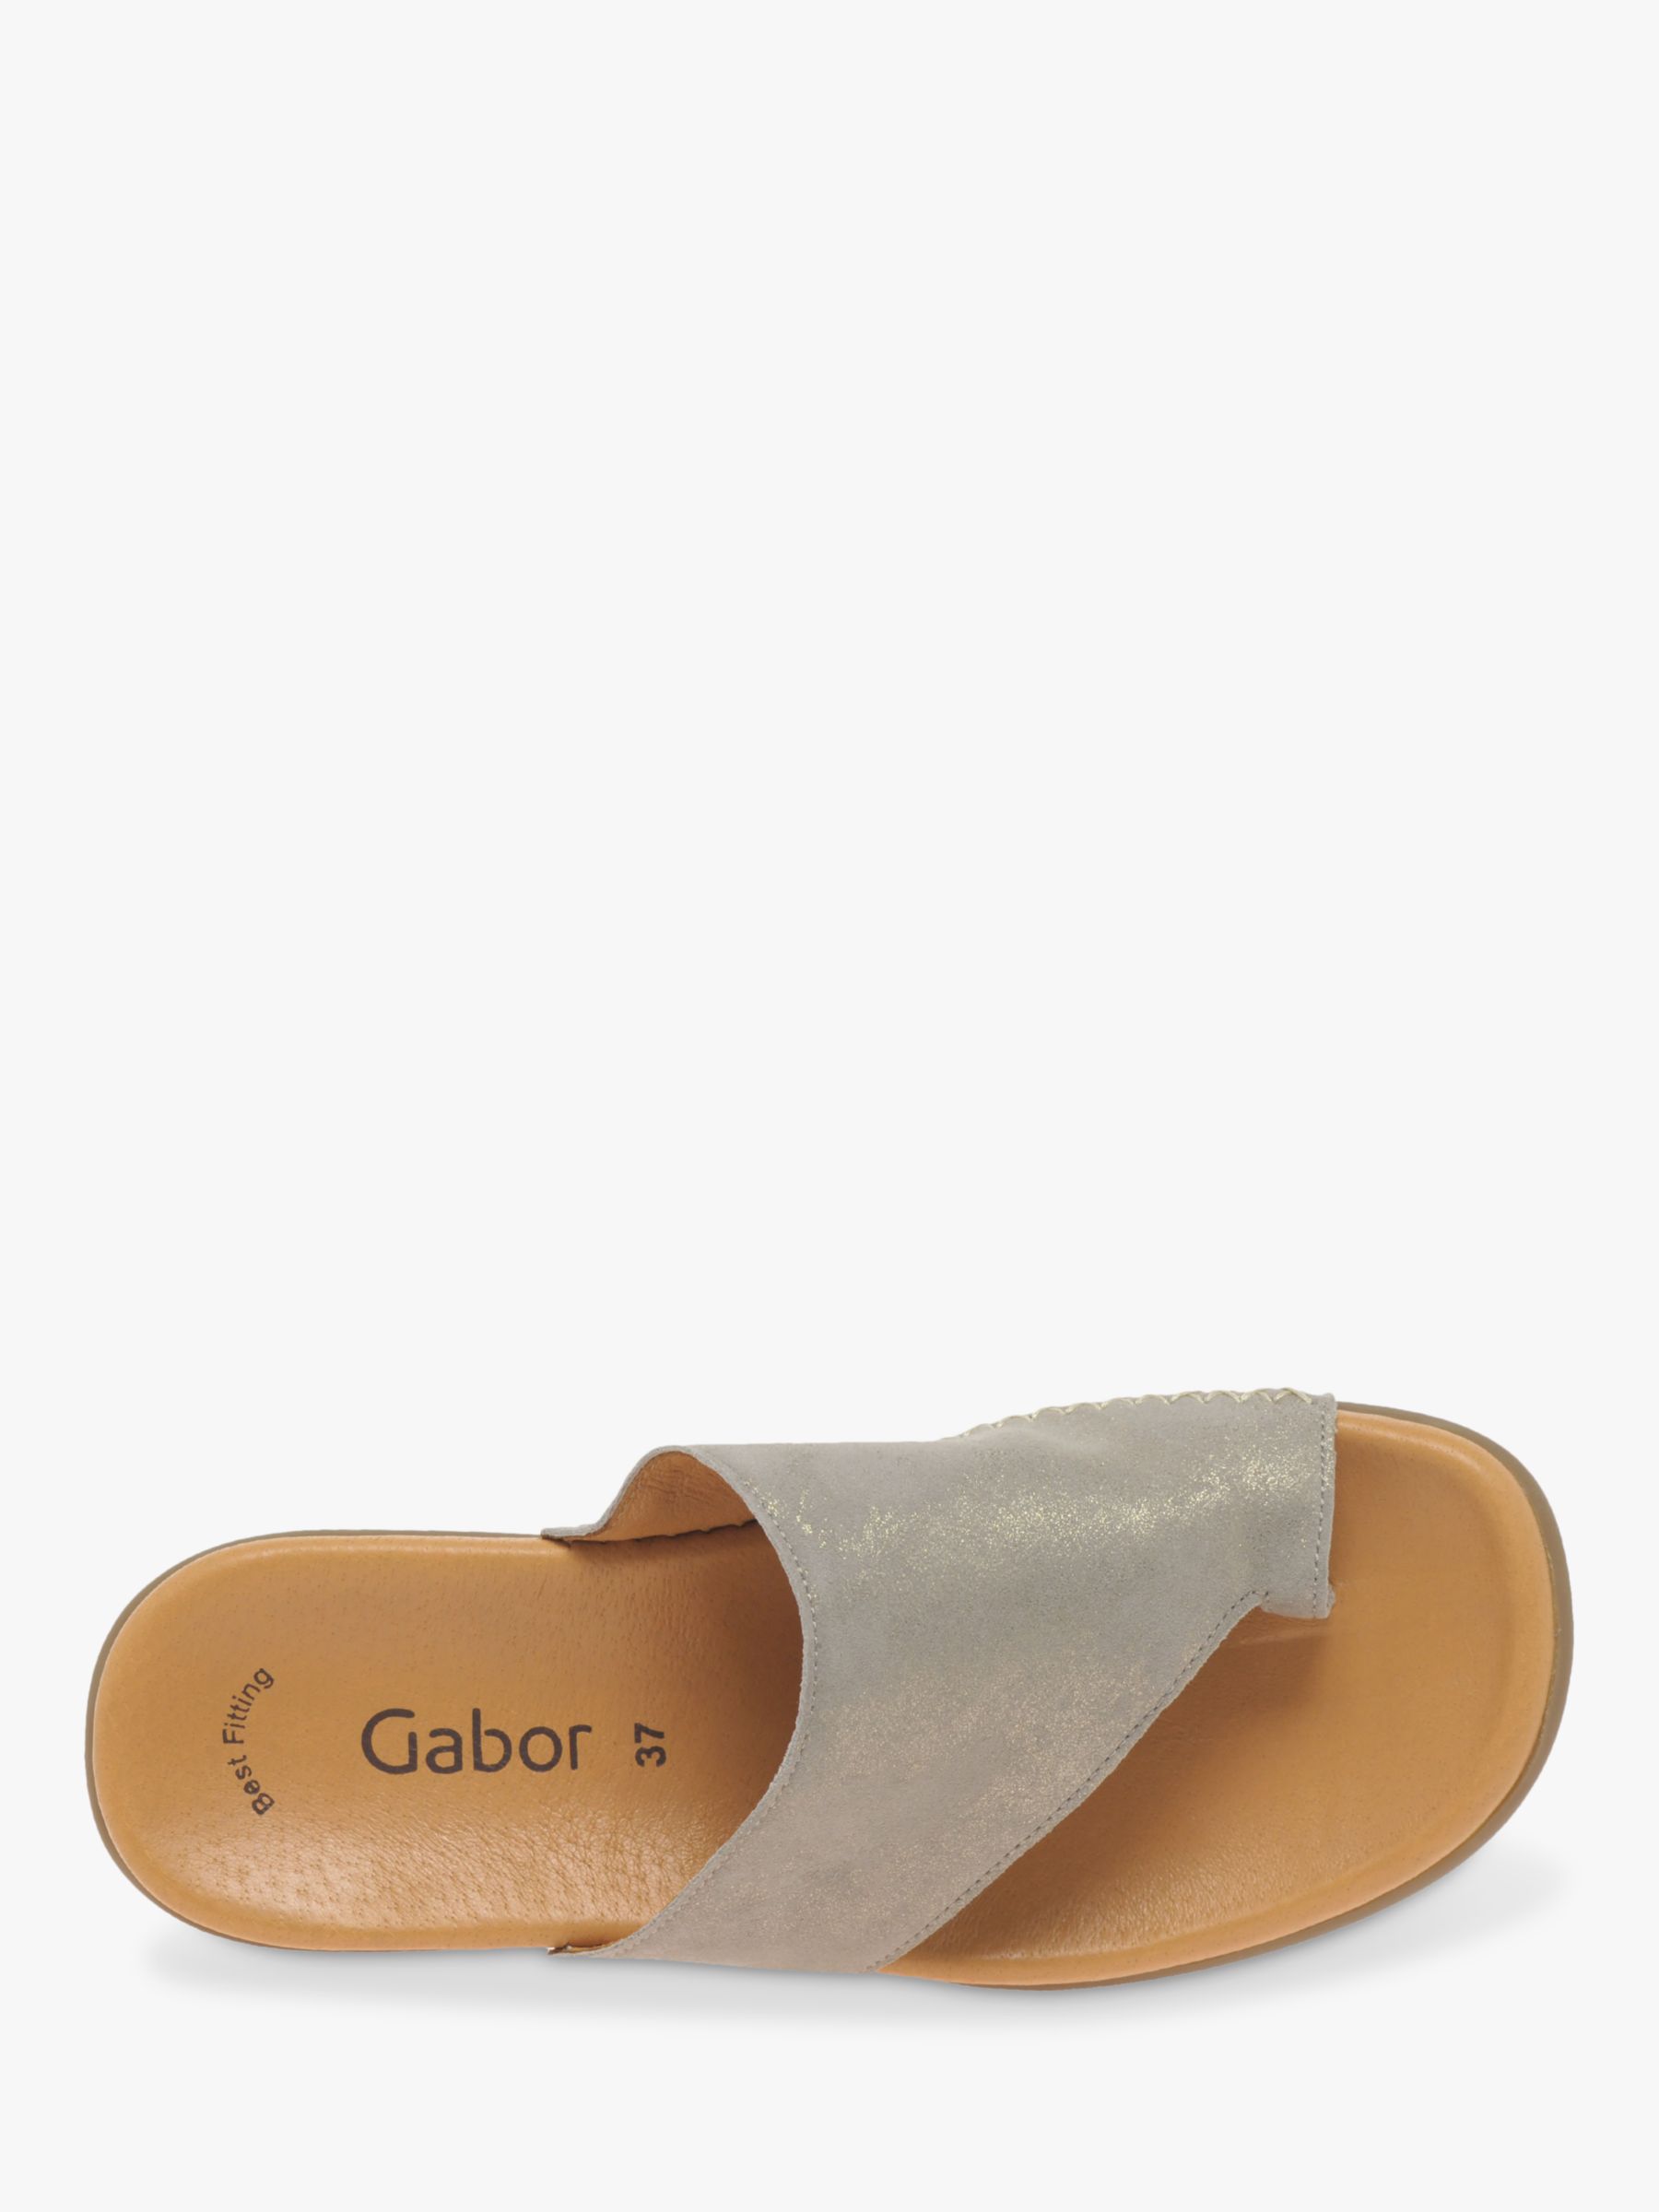 klint kassette Barcelona Gabor Lanzarote Leather Mule Sandals, Neutral at John Lewis & Partners